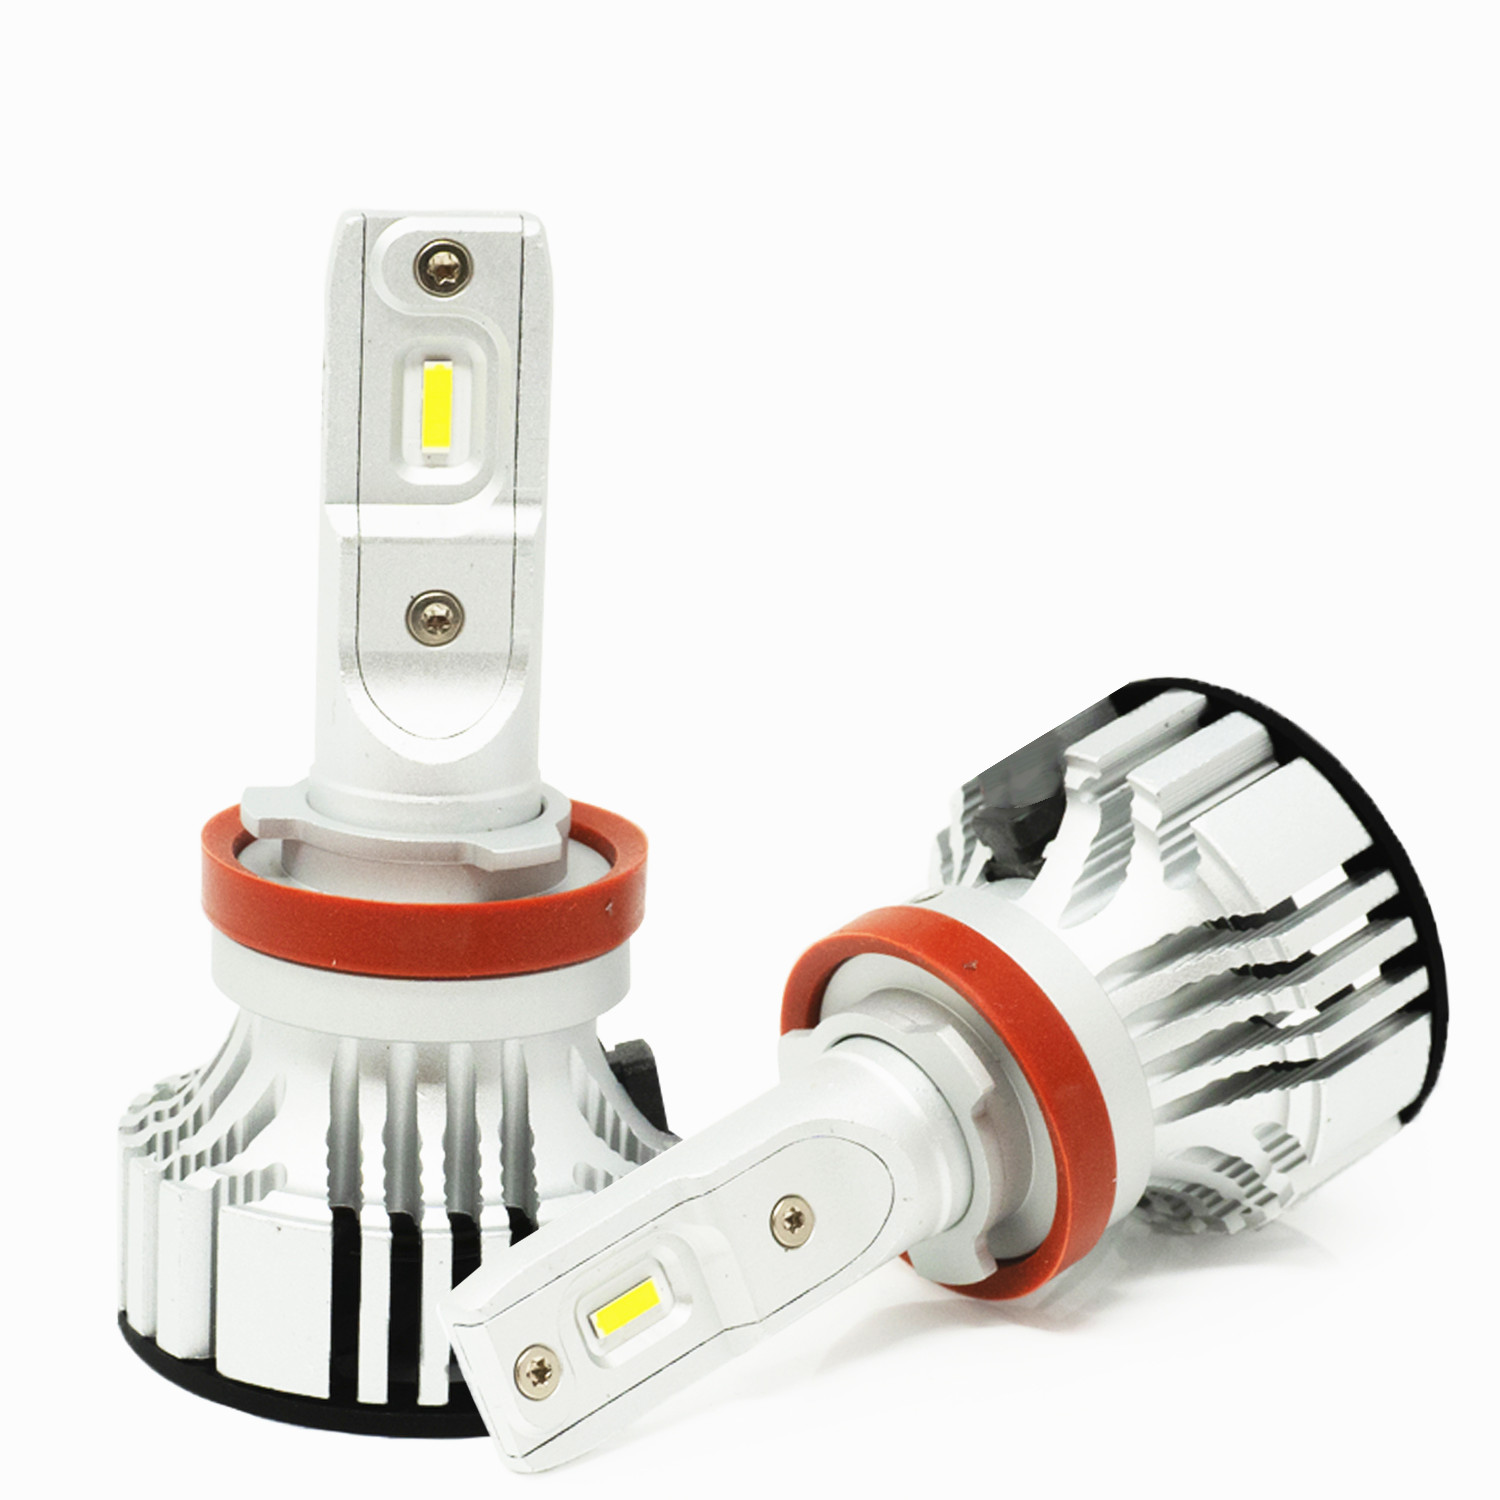 Chevry Silverado LED Headlights Conversion Kits Bulbs Replace